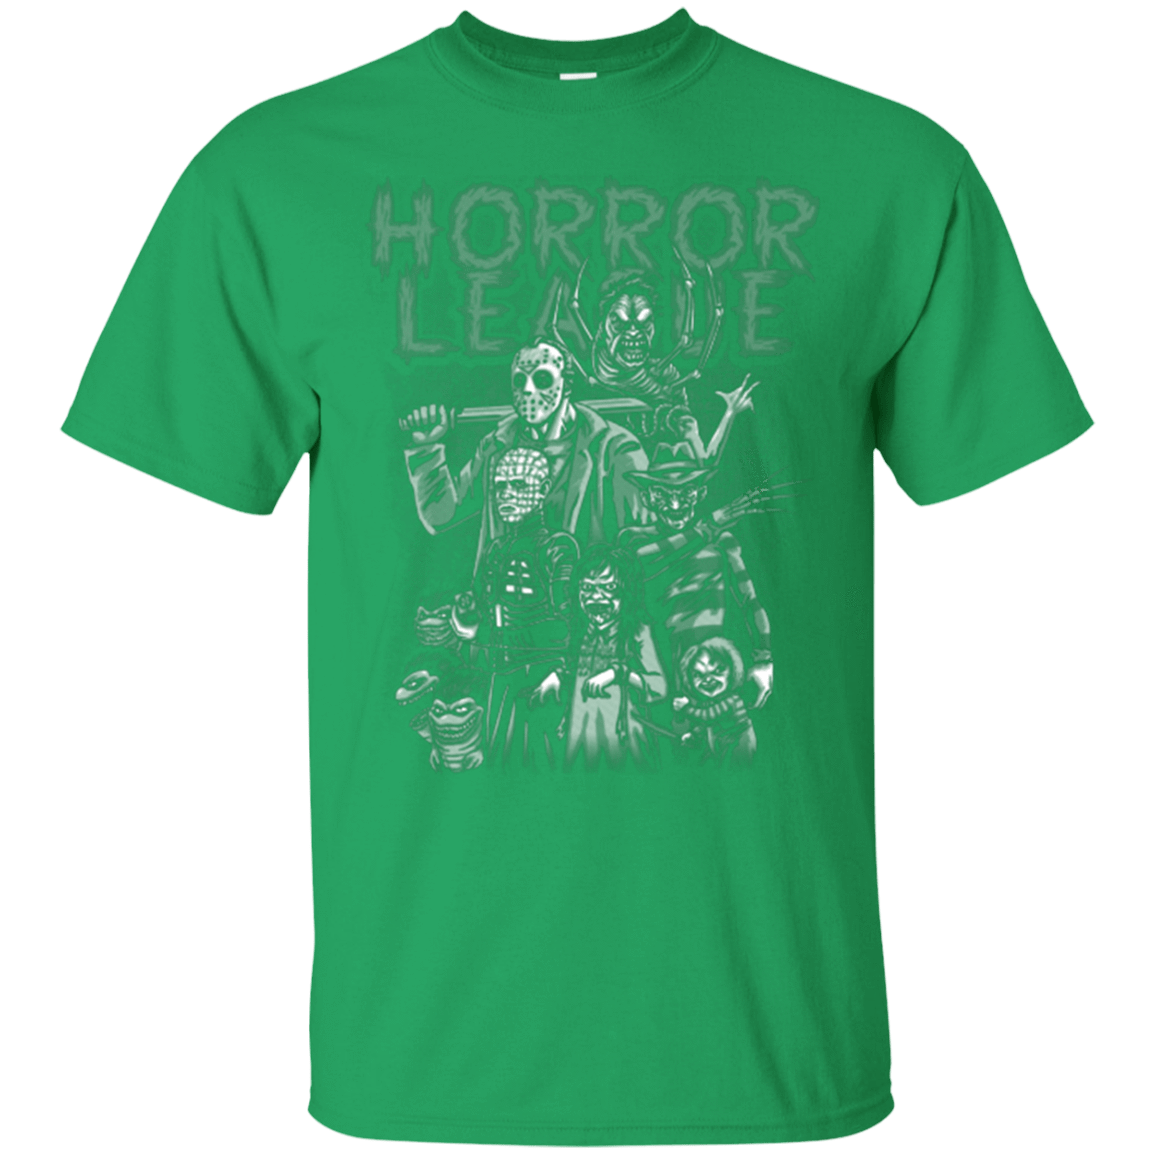 T-Shirts Irish Green / Small Horror League T-Shirt